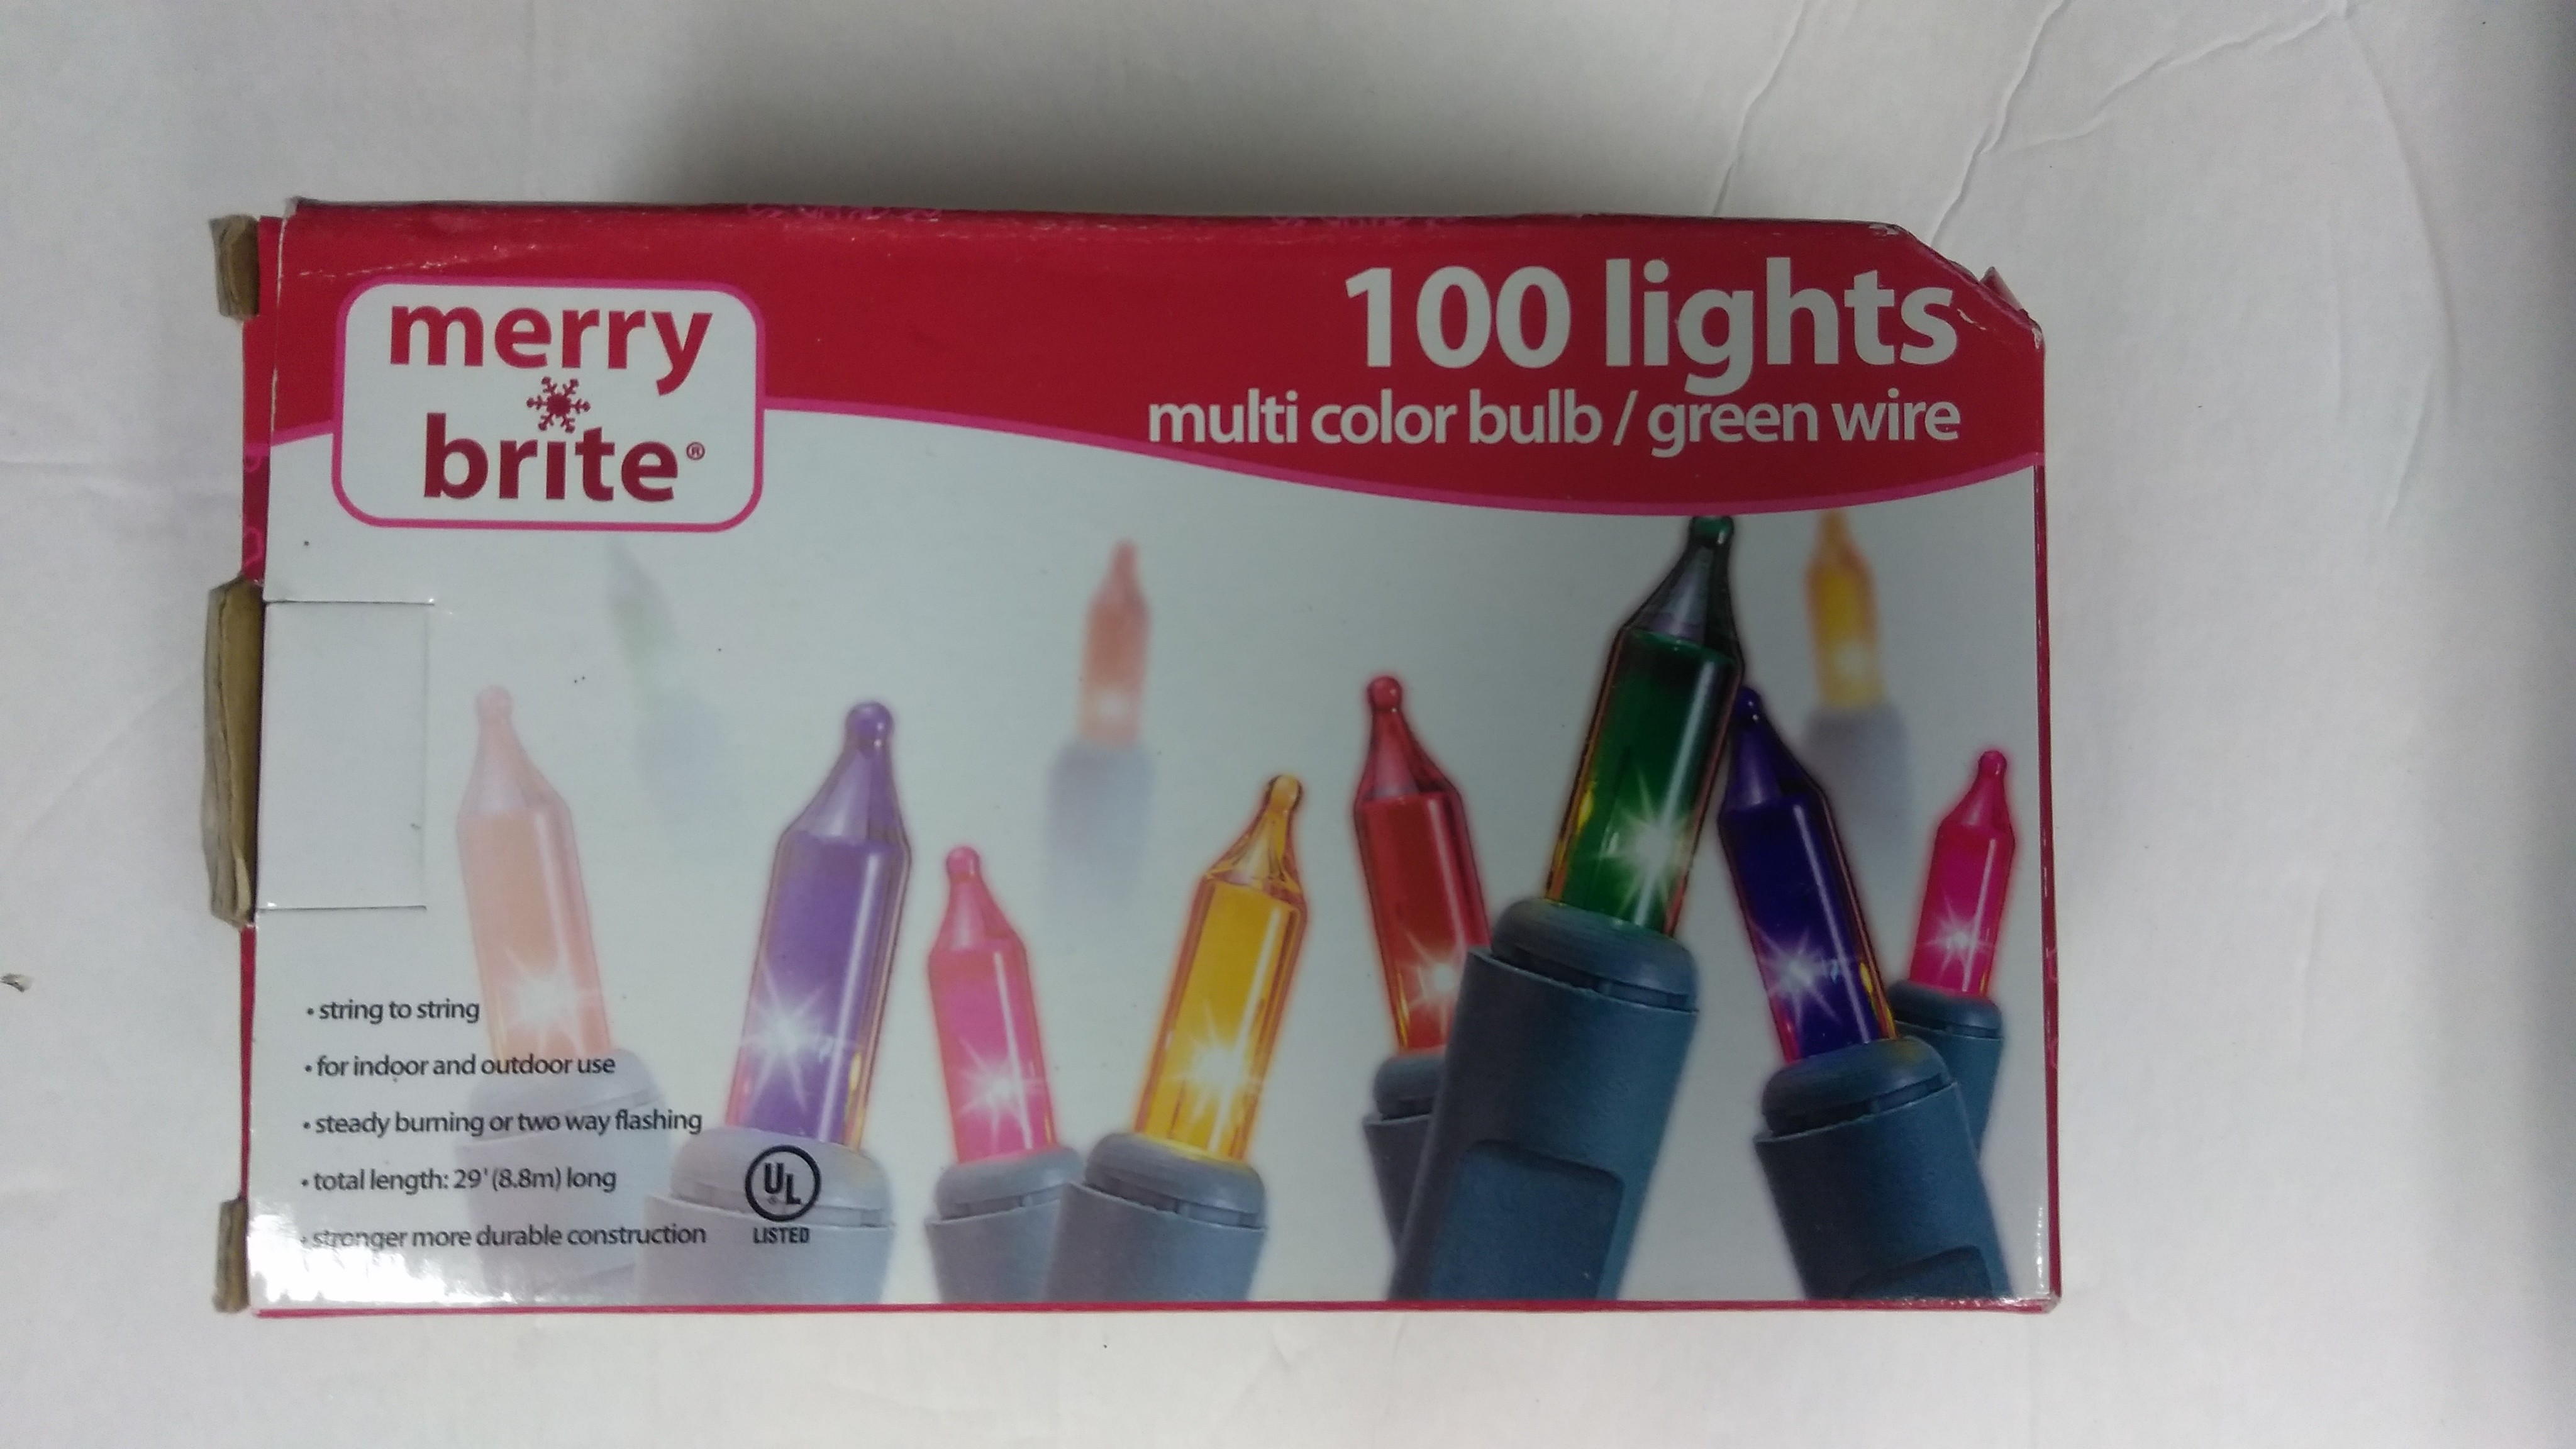 Merry Brite 100 lights multi color bulb/green wire